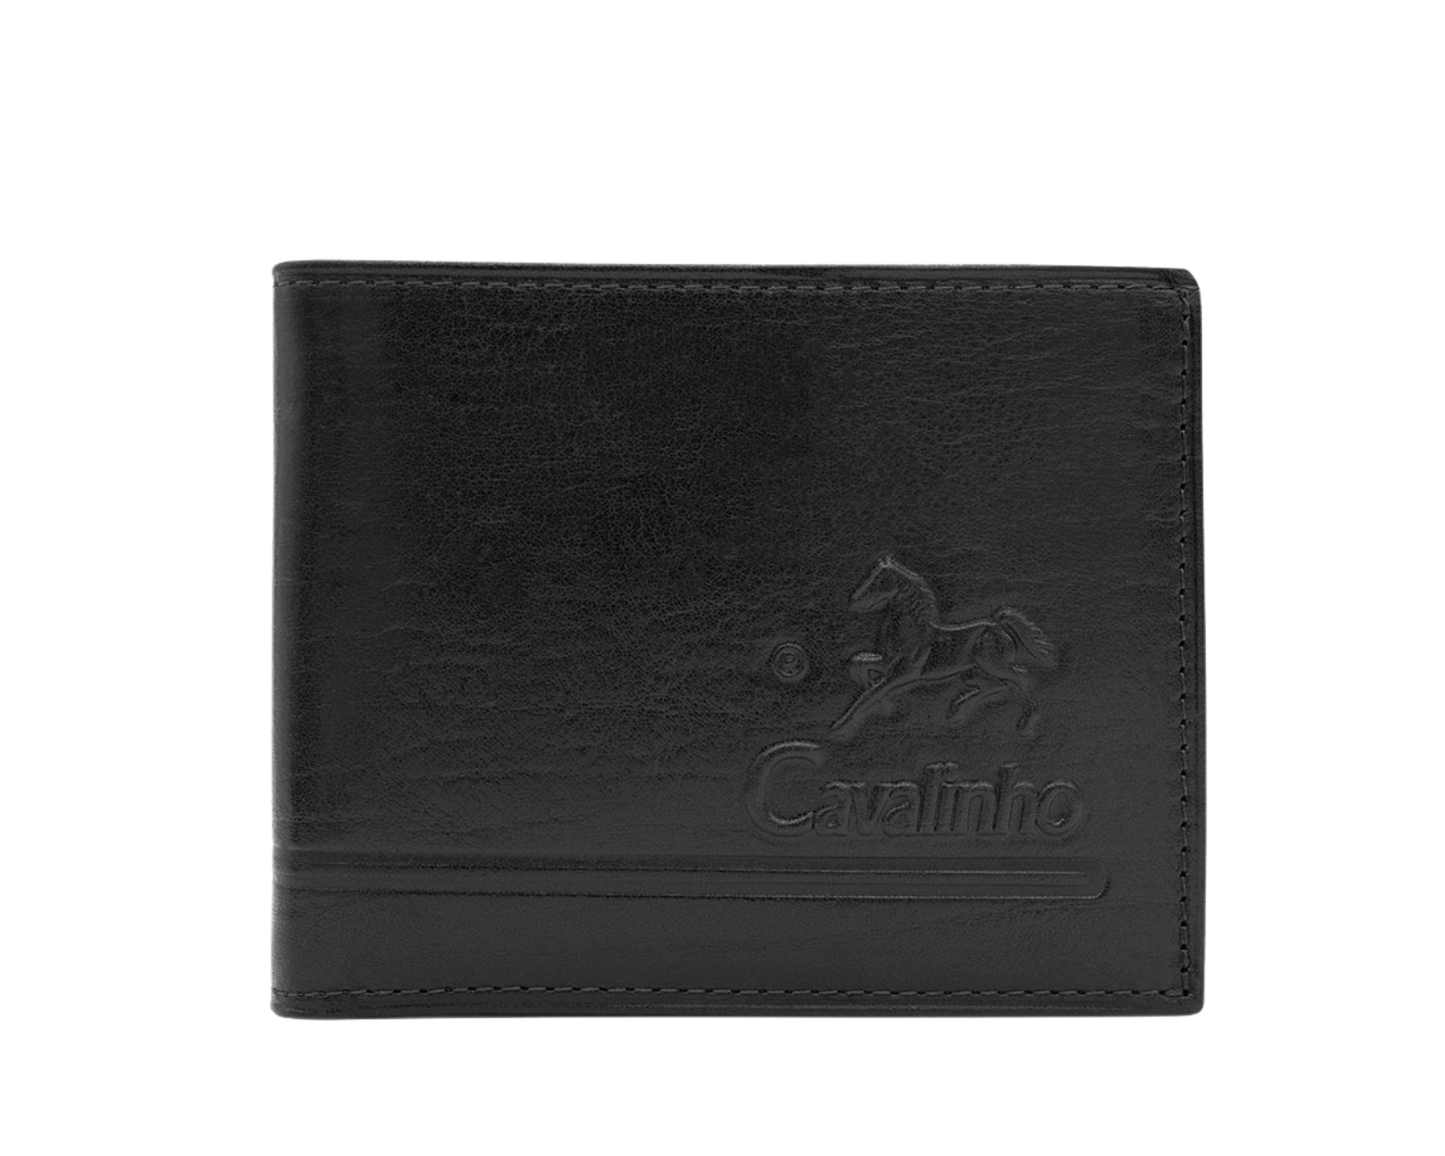 Cavalinho Men's Trifold Leather Wallet - Black - 28610505.01_P01